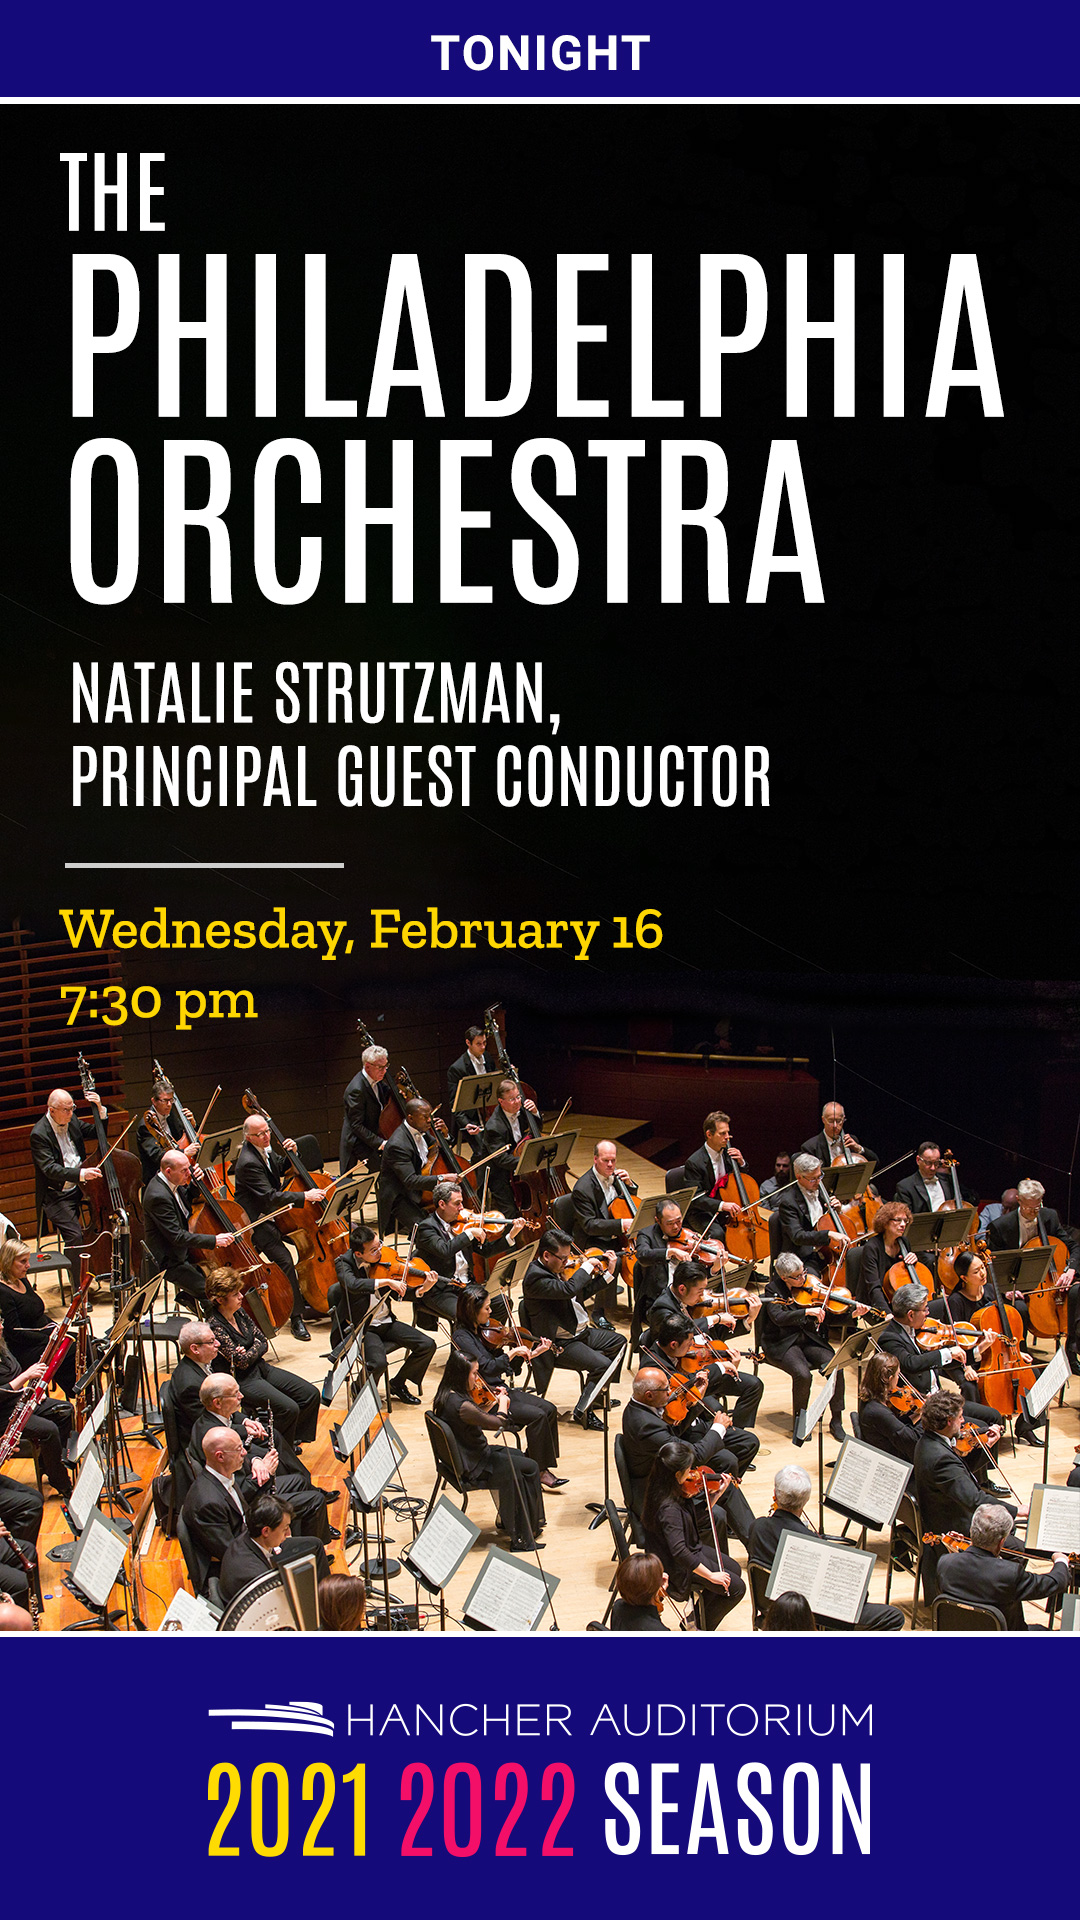 The Philadelphia Orchestra - Tonight